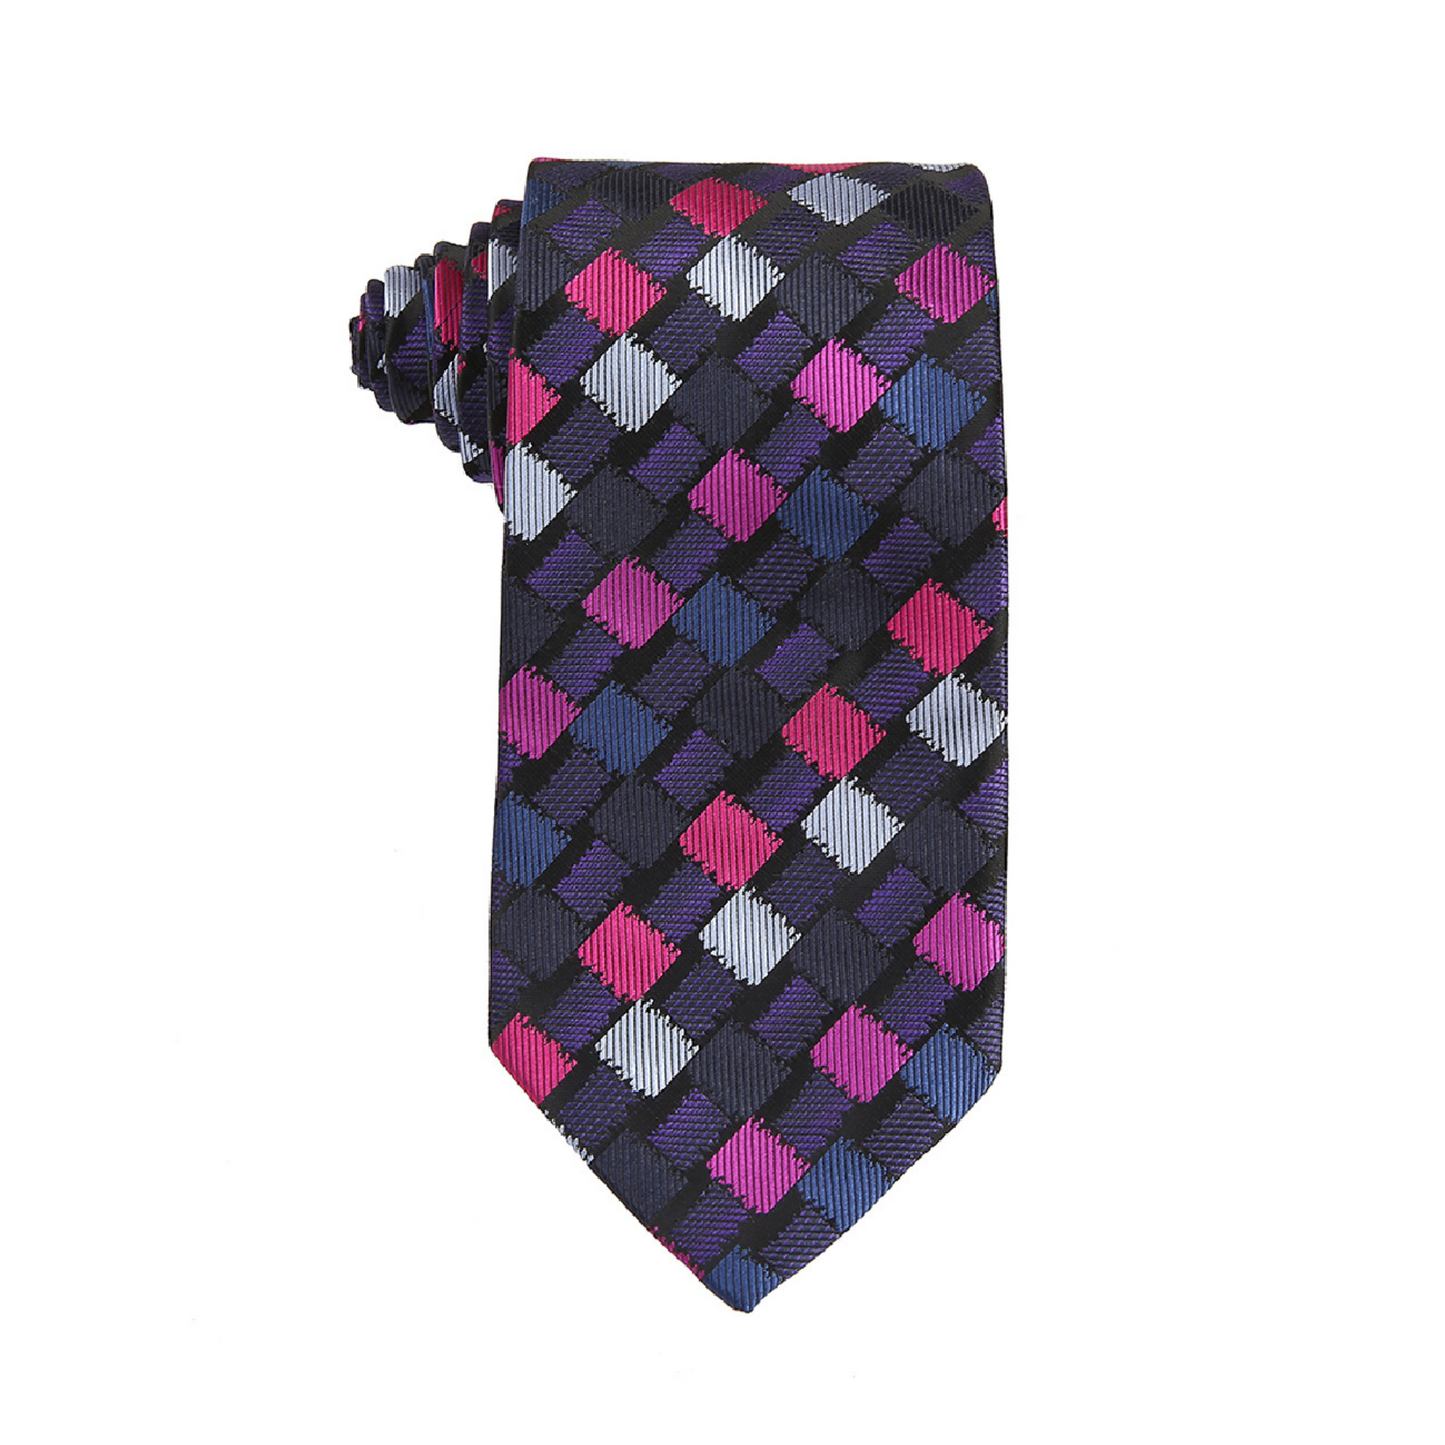 Pino Baldini Men's Checkered Print Ties (3 FOR $30)